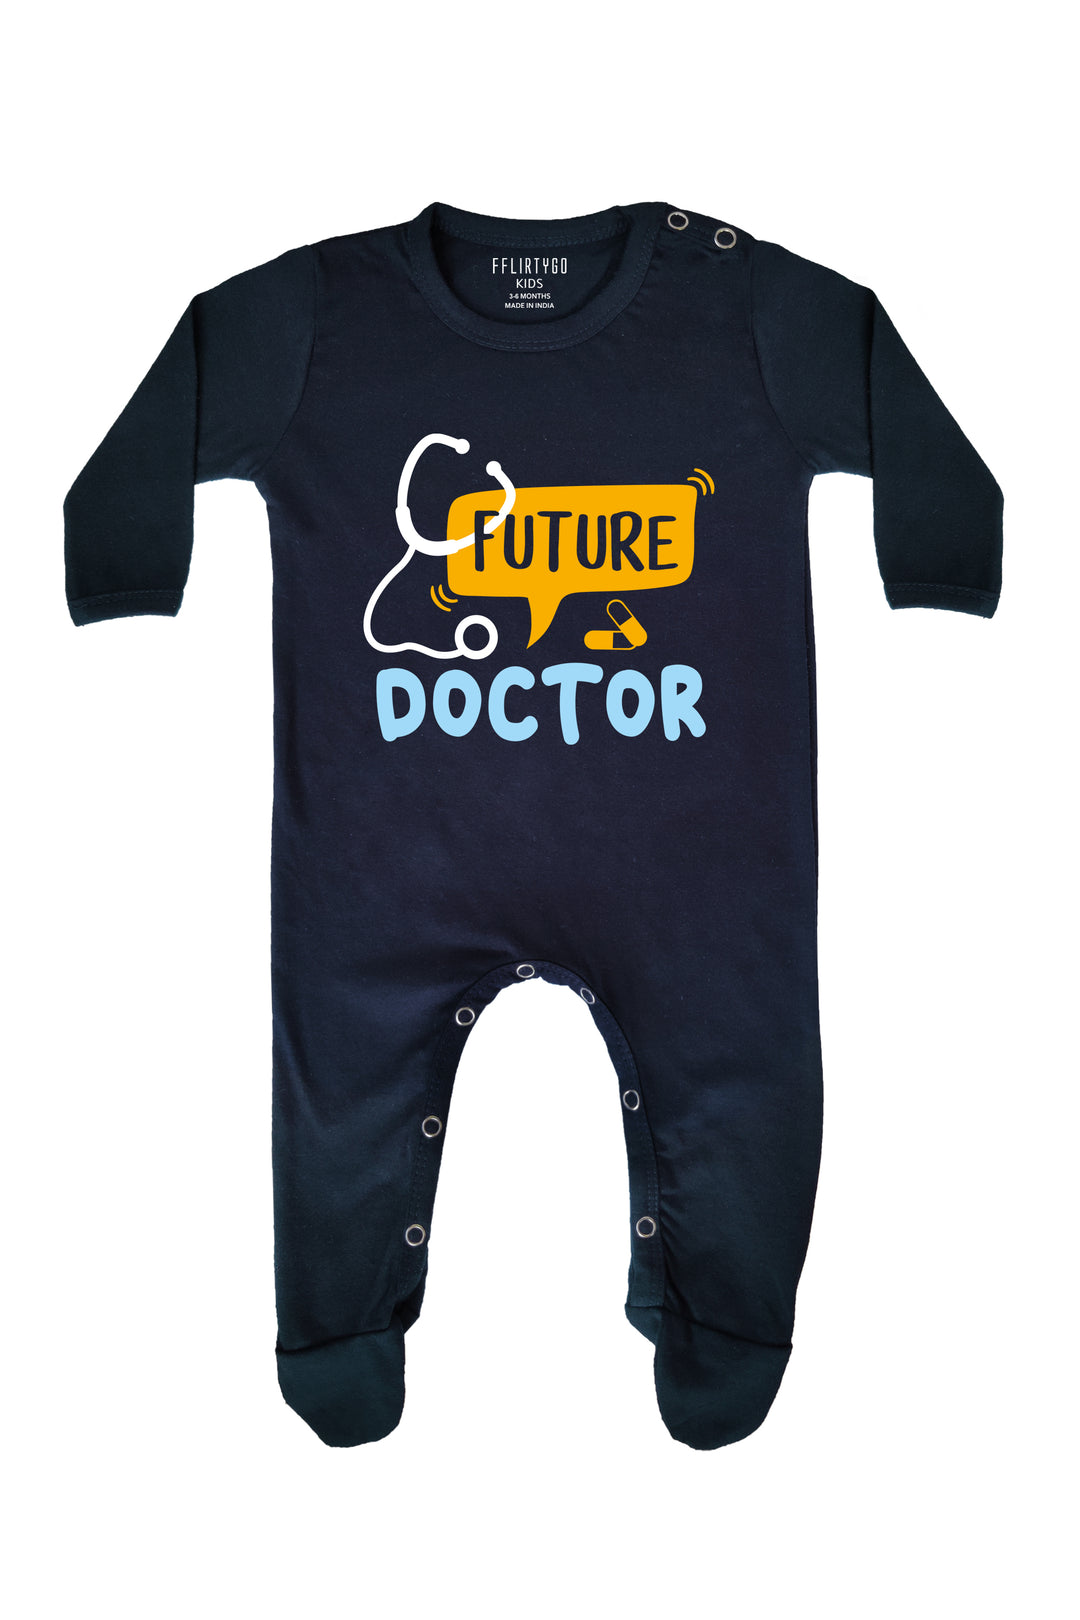 Future Doctor